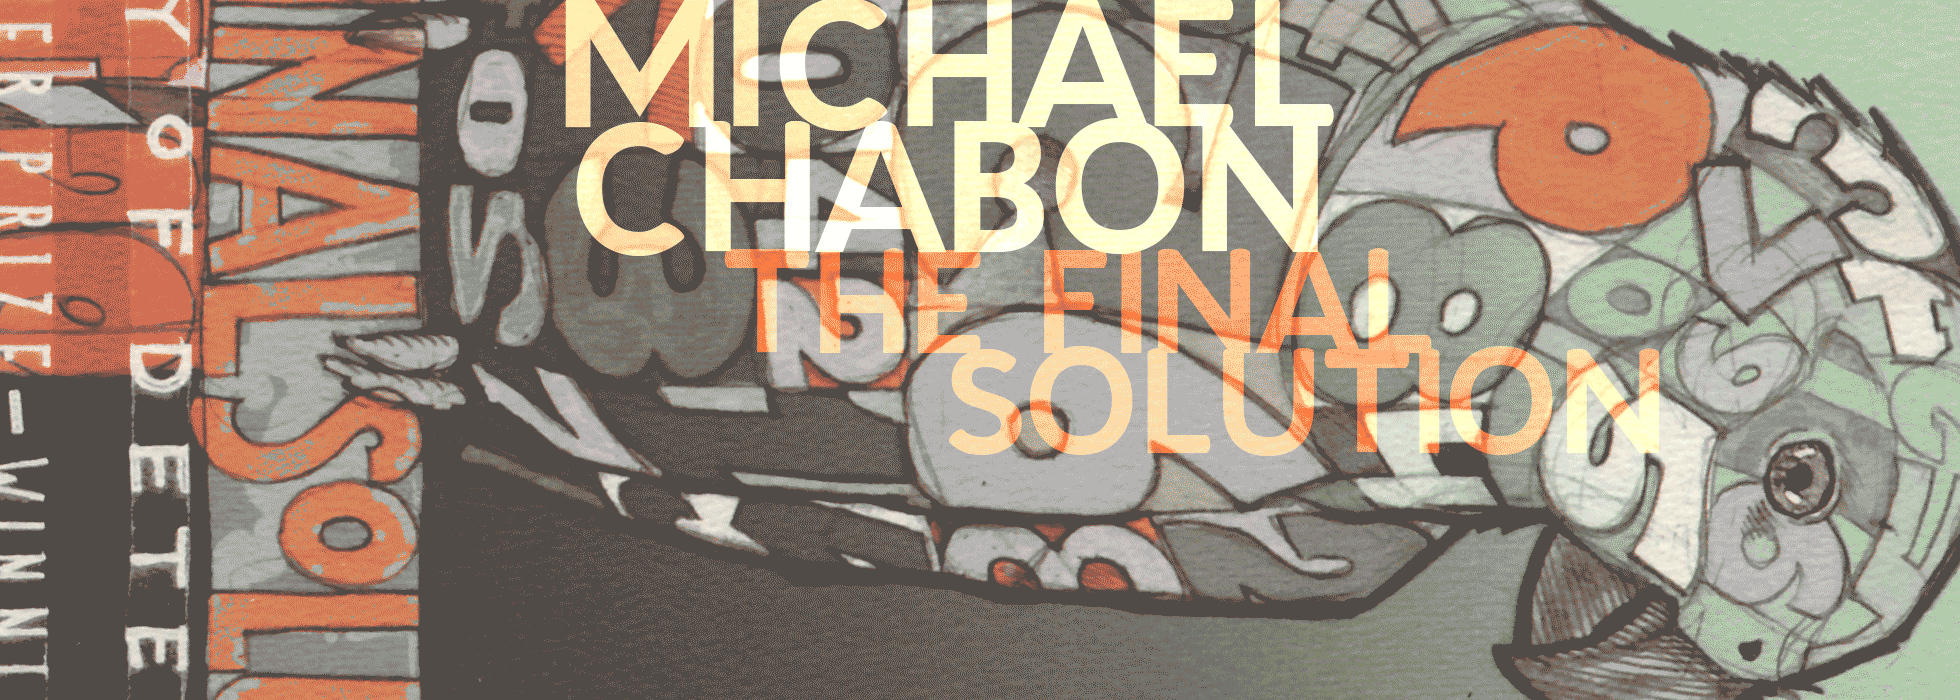 Michael Chabon的最终解决方案